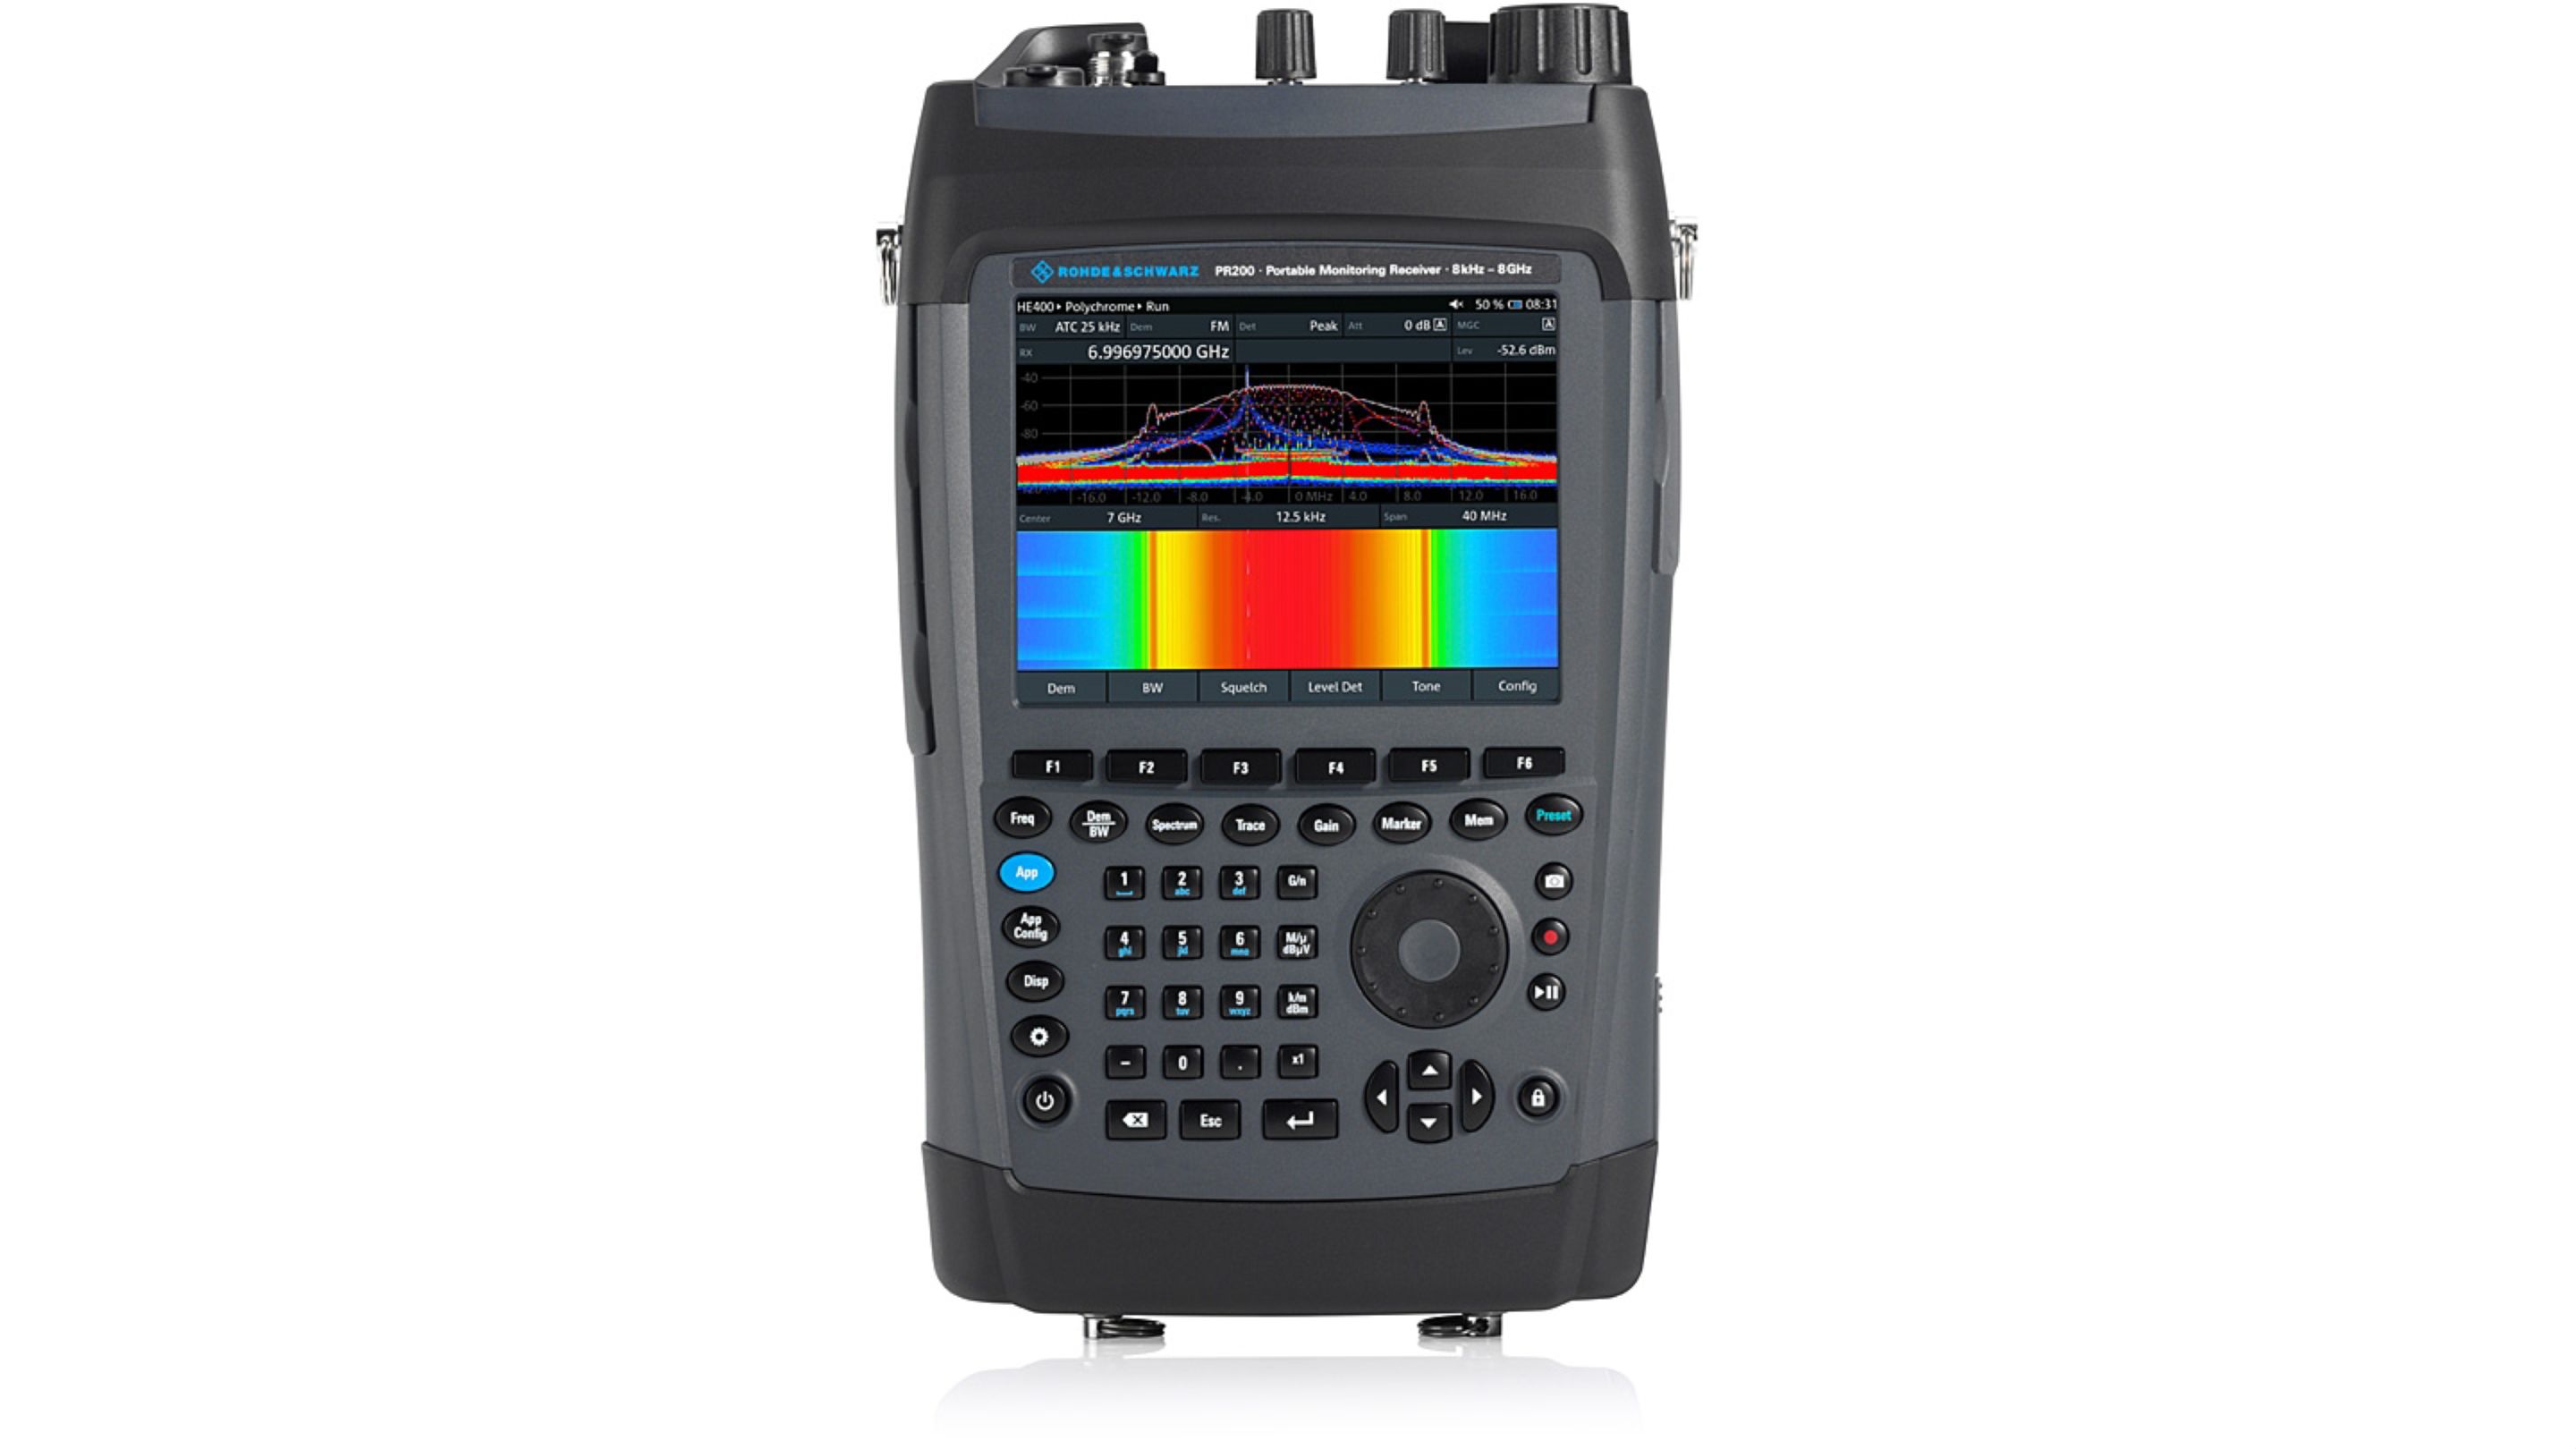 Pr200 Portable Monitoring Receiver Front View Rohde Schwarz 200 5972 2880 1620 1 